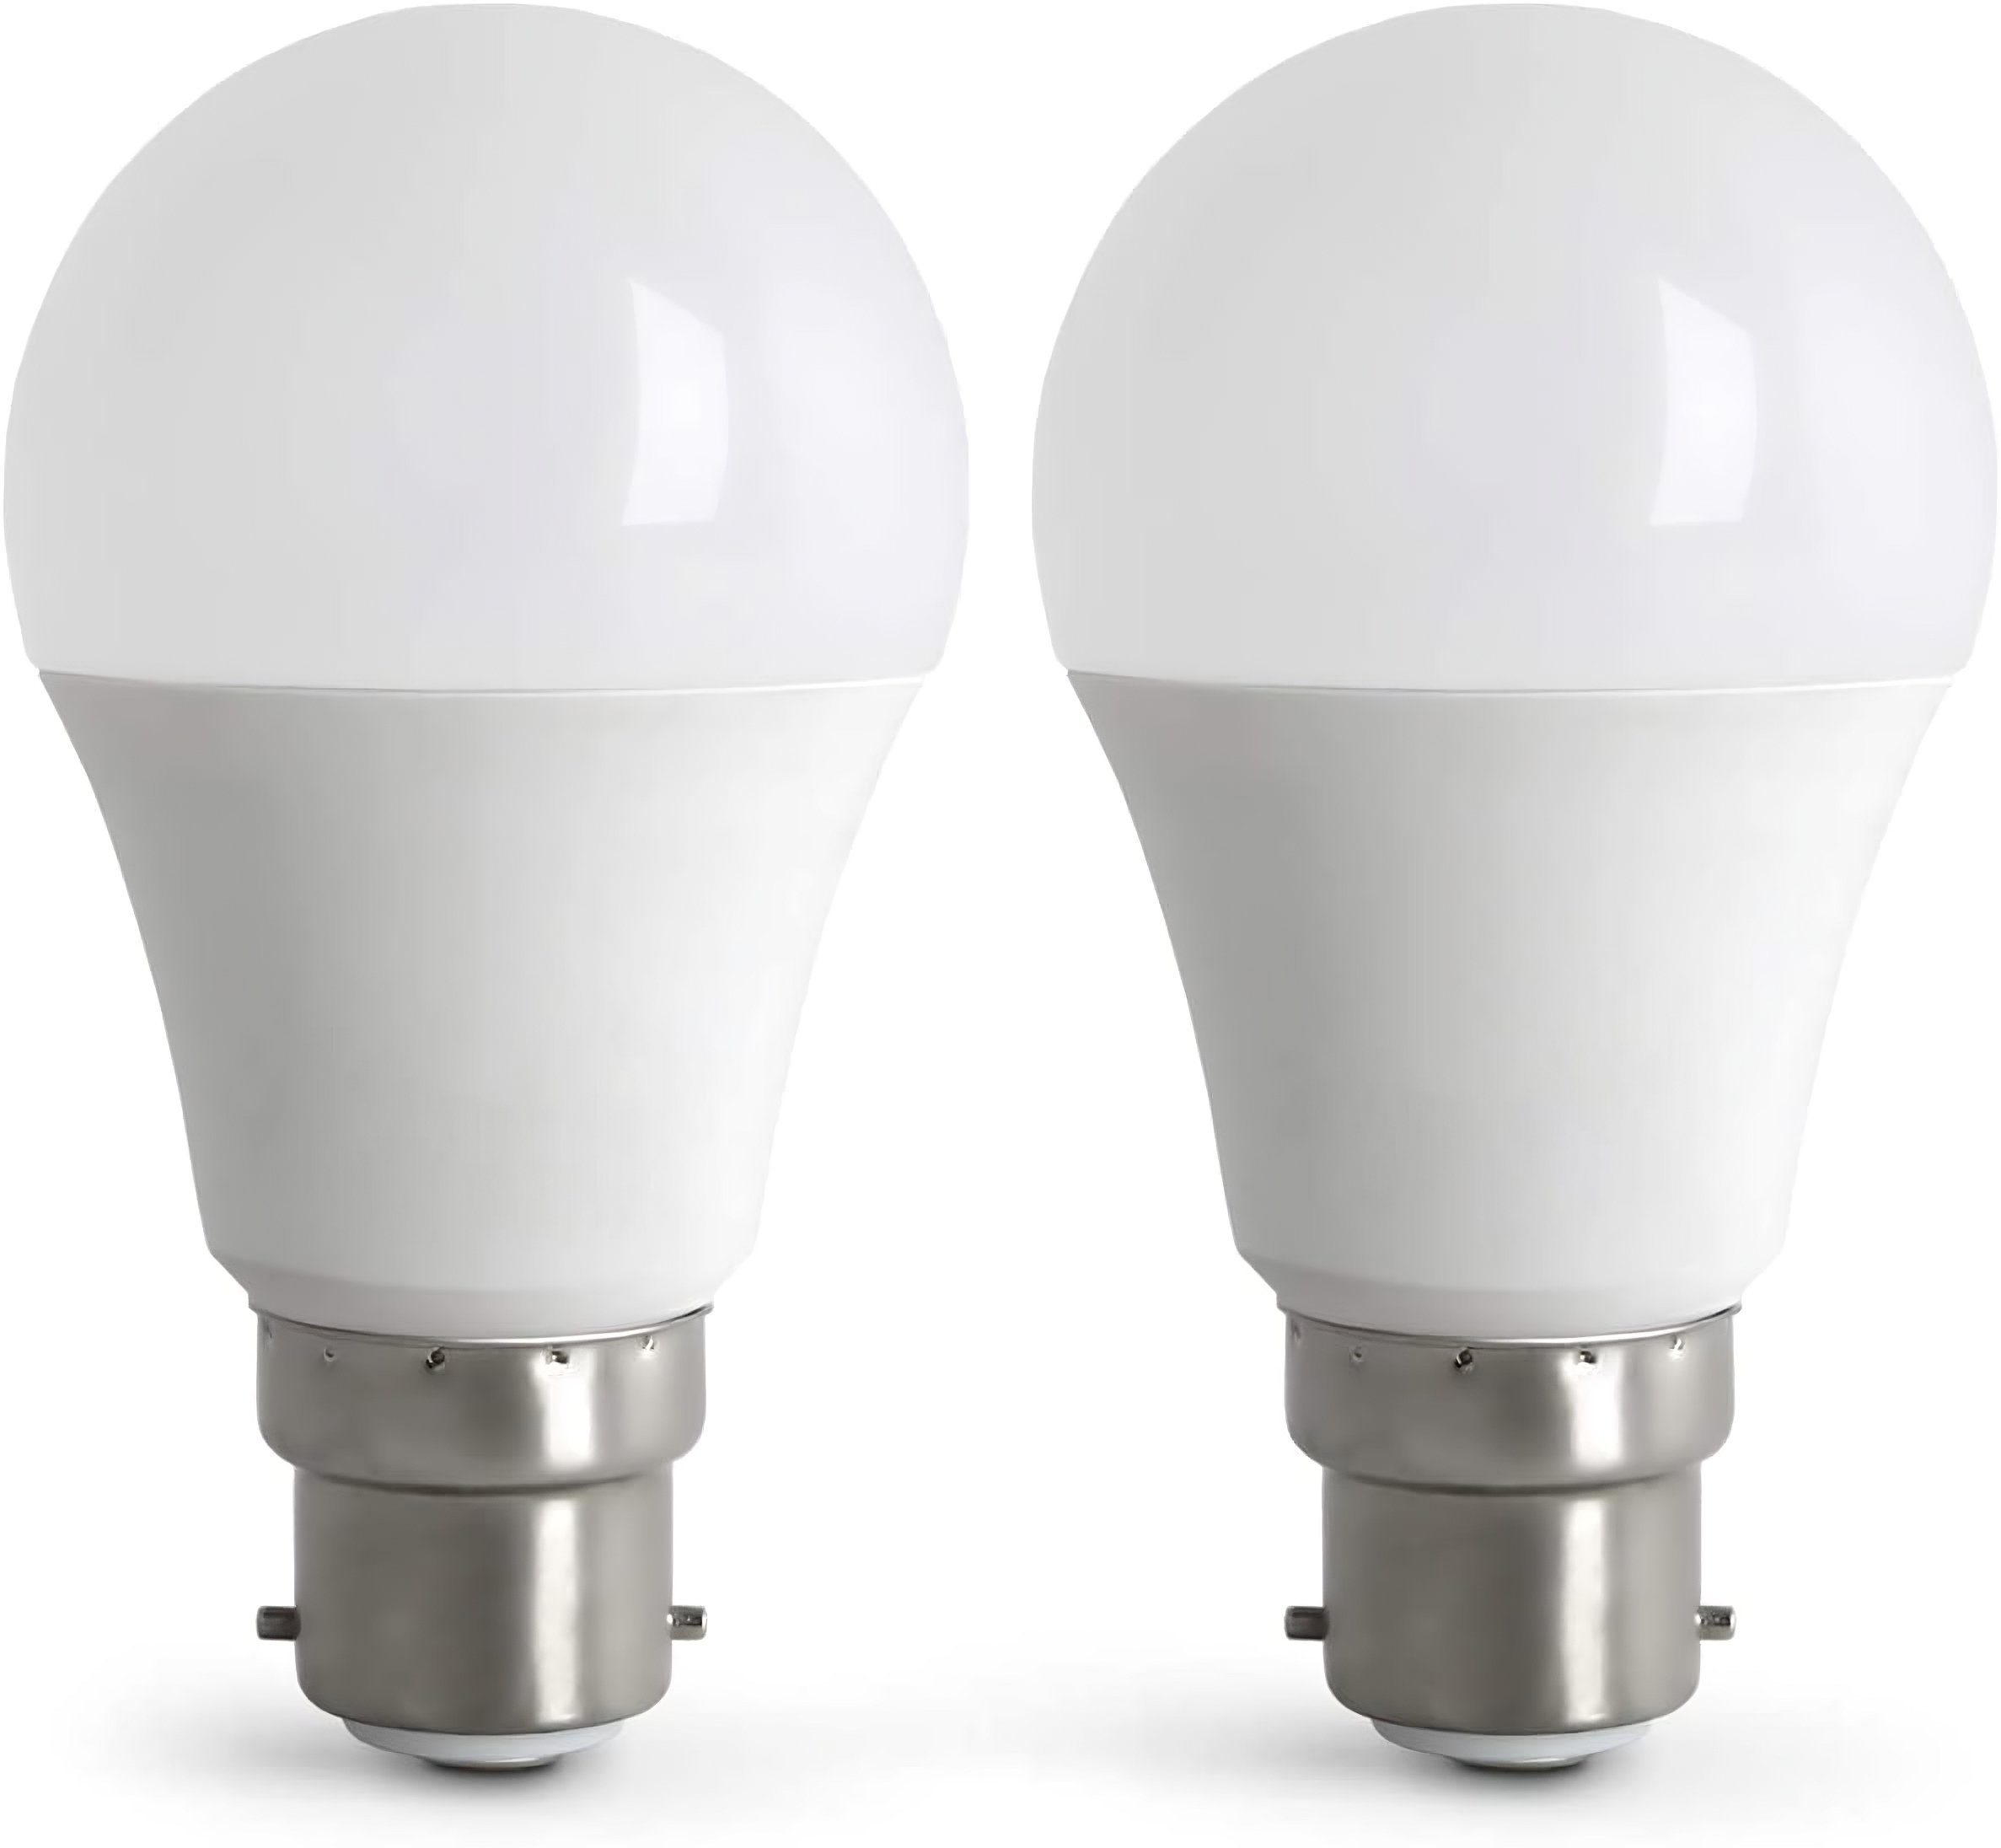 LED Tageslichtlampe LED, Glühbirne, 4 Warmweiss, Birne, 3000K, LED Aglaia 9W B22, Lampe, integriert, Stk., B22 fest